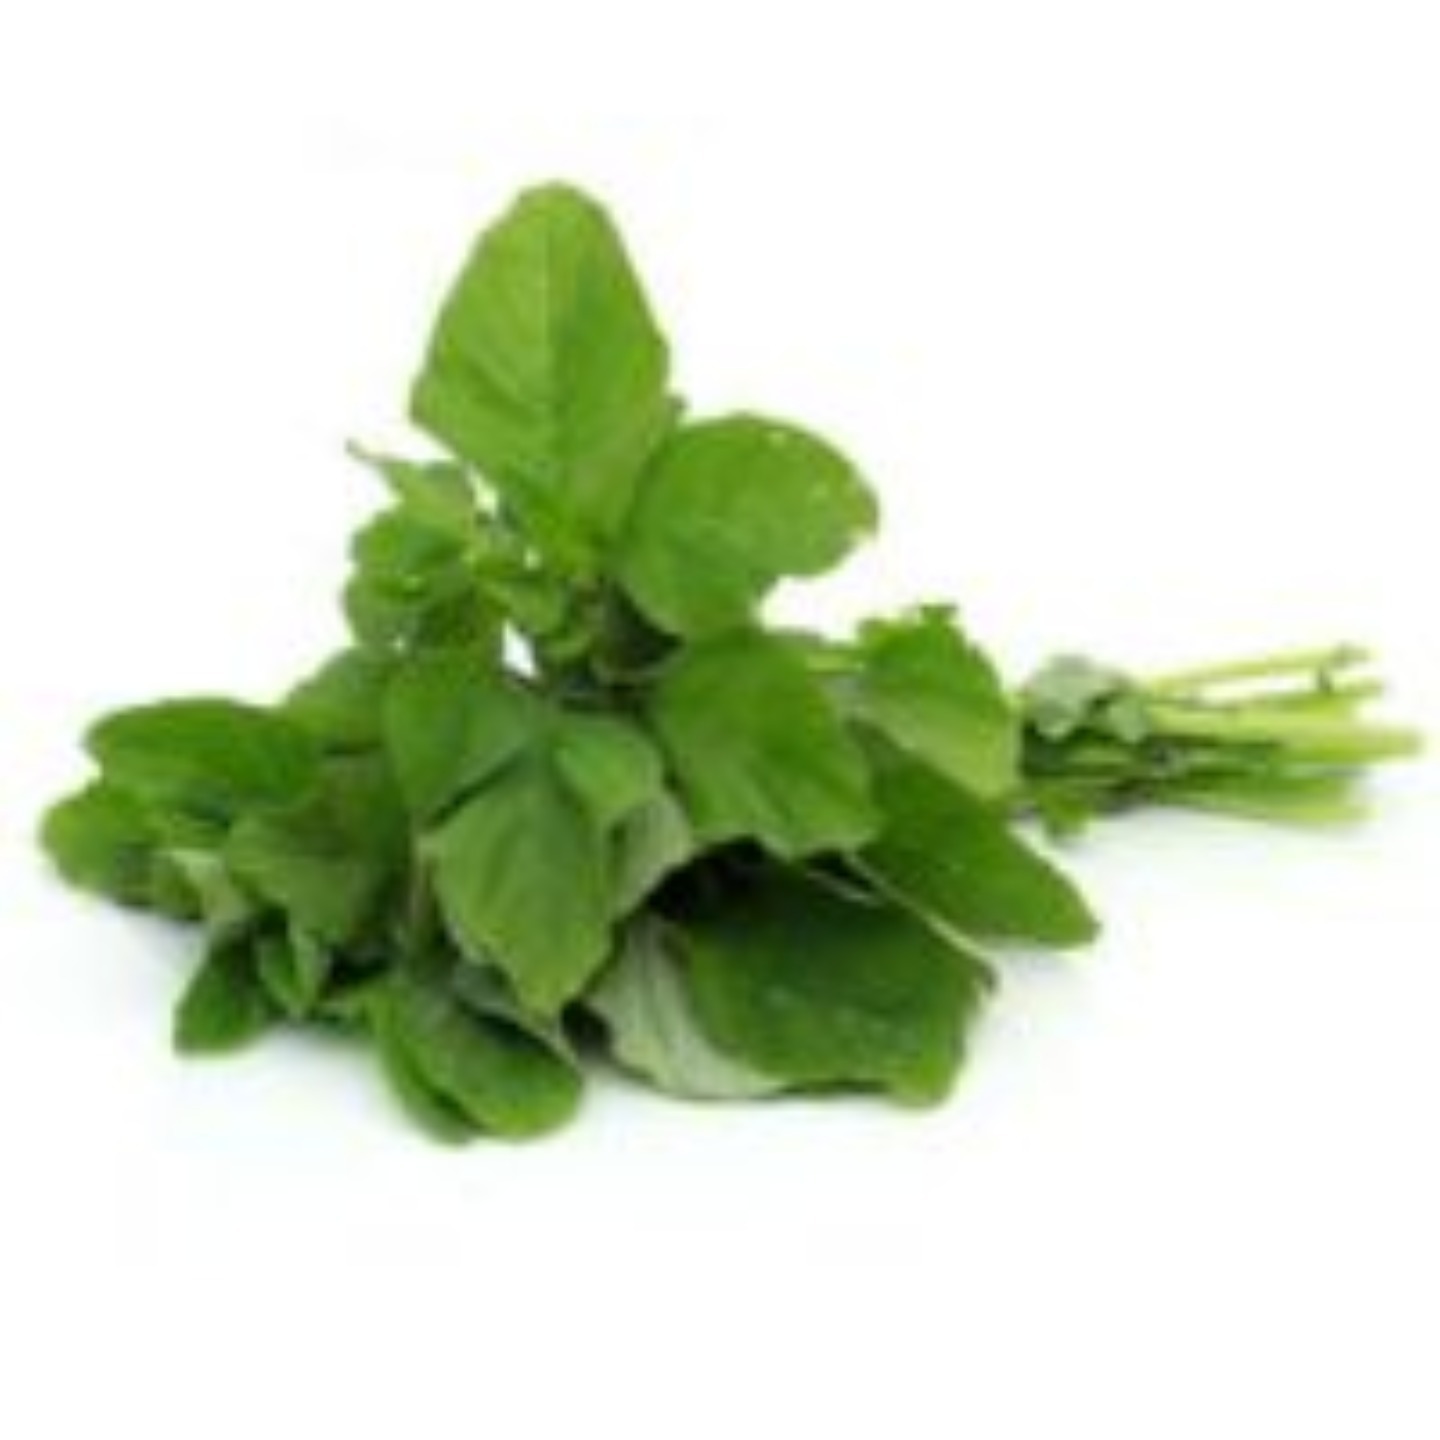 MHG-LFRGN-Chakota-green sorrel -50 seeds